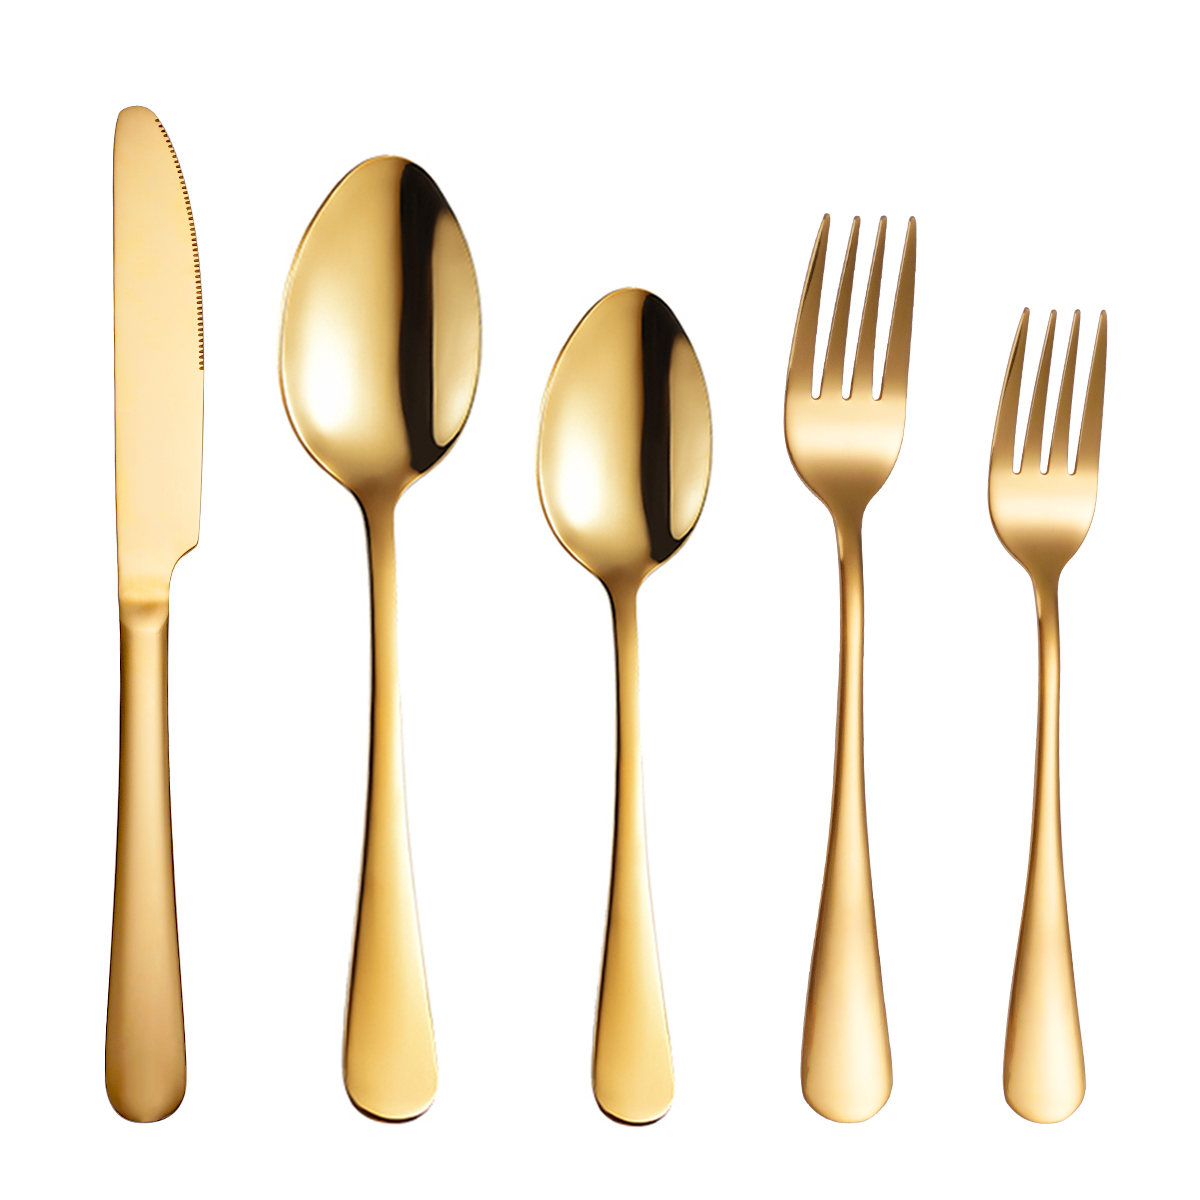 Wholesale Amazon Hot Gold Flatware Restaurant Shiny Stainless Steel Cutlery Set